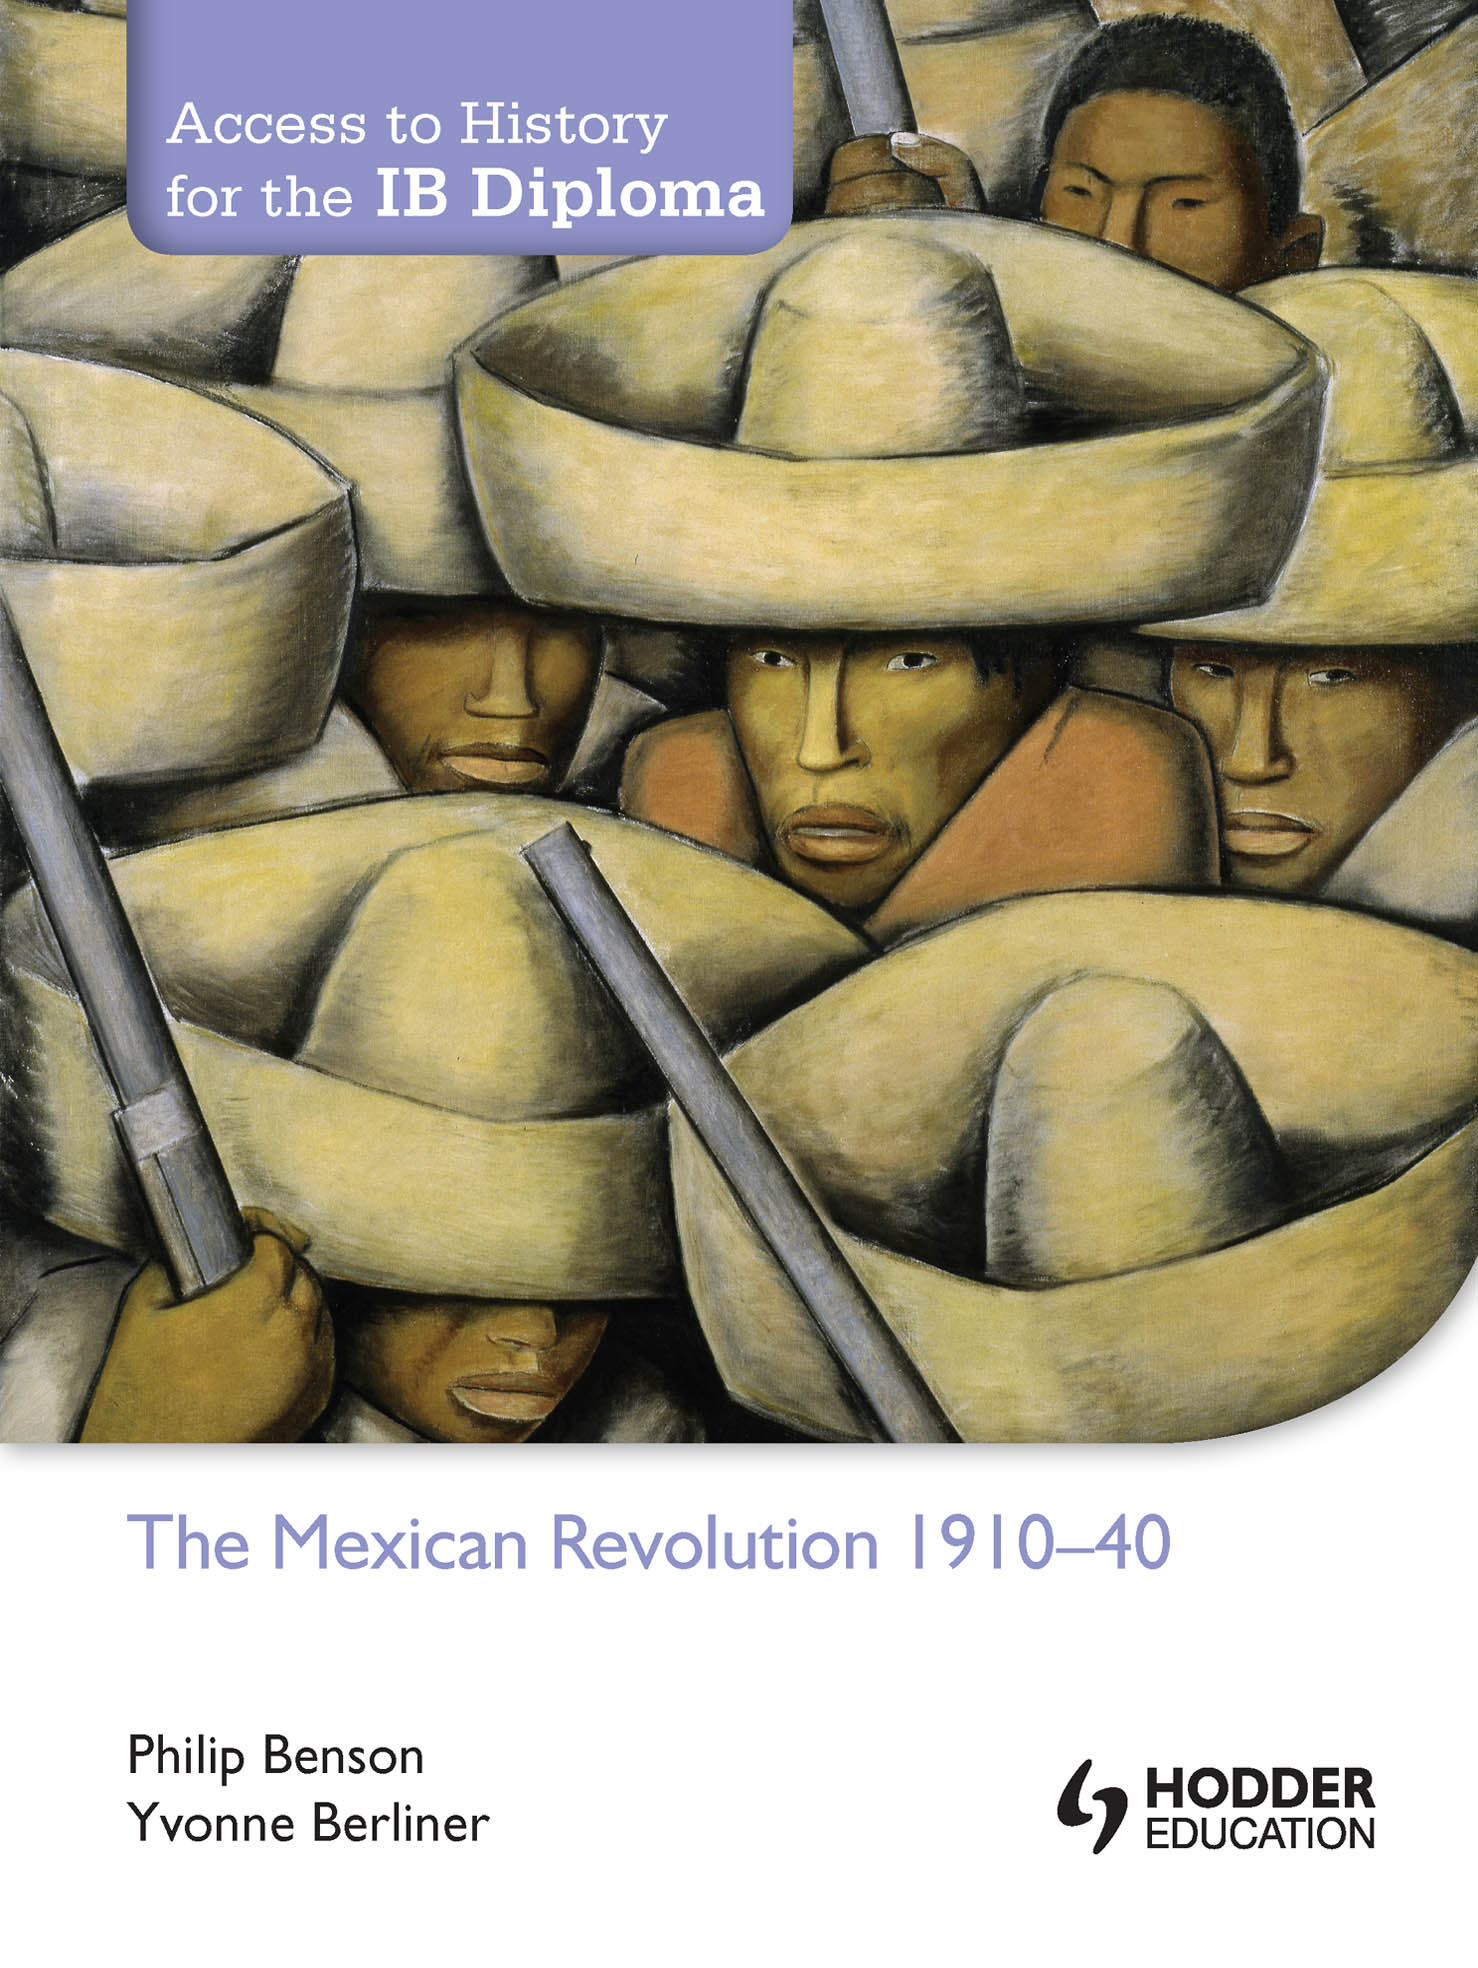 [DESCATALOGADO] Access to History for the IB Diploma: The Mexican Revolution 1910-1940